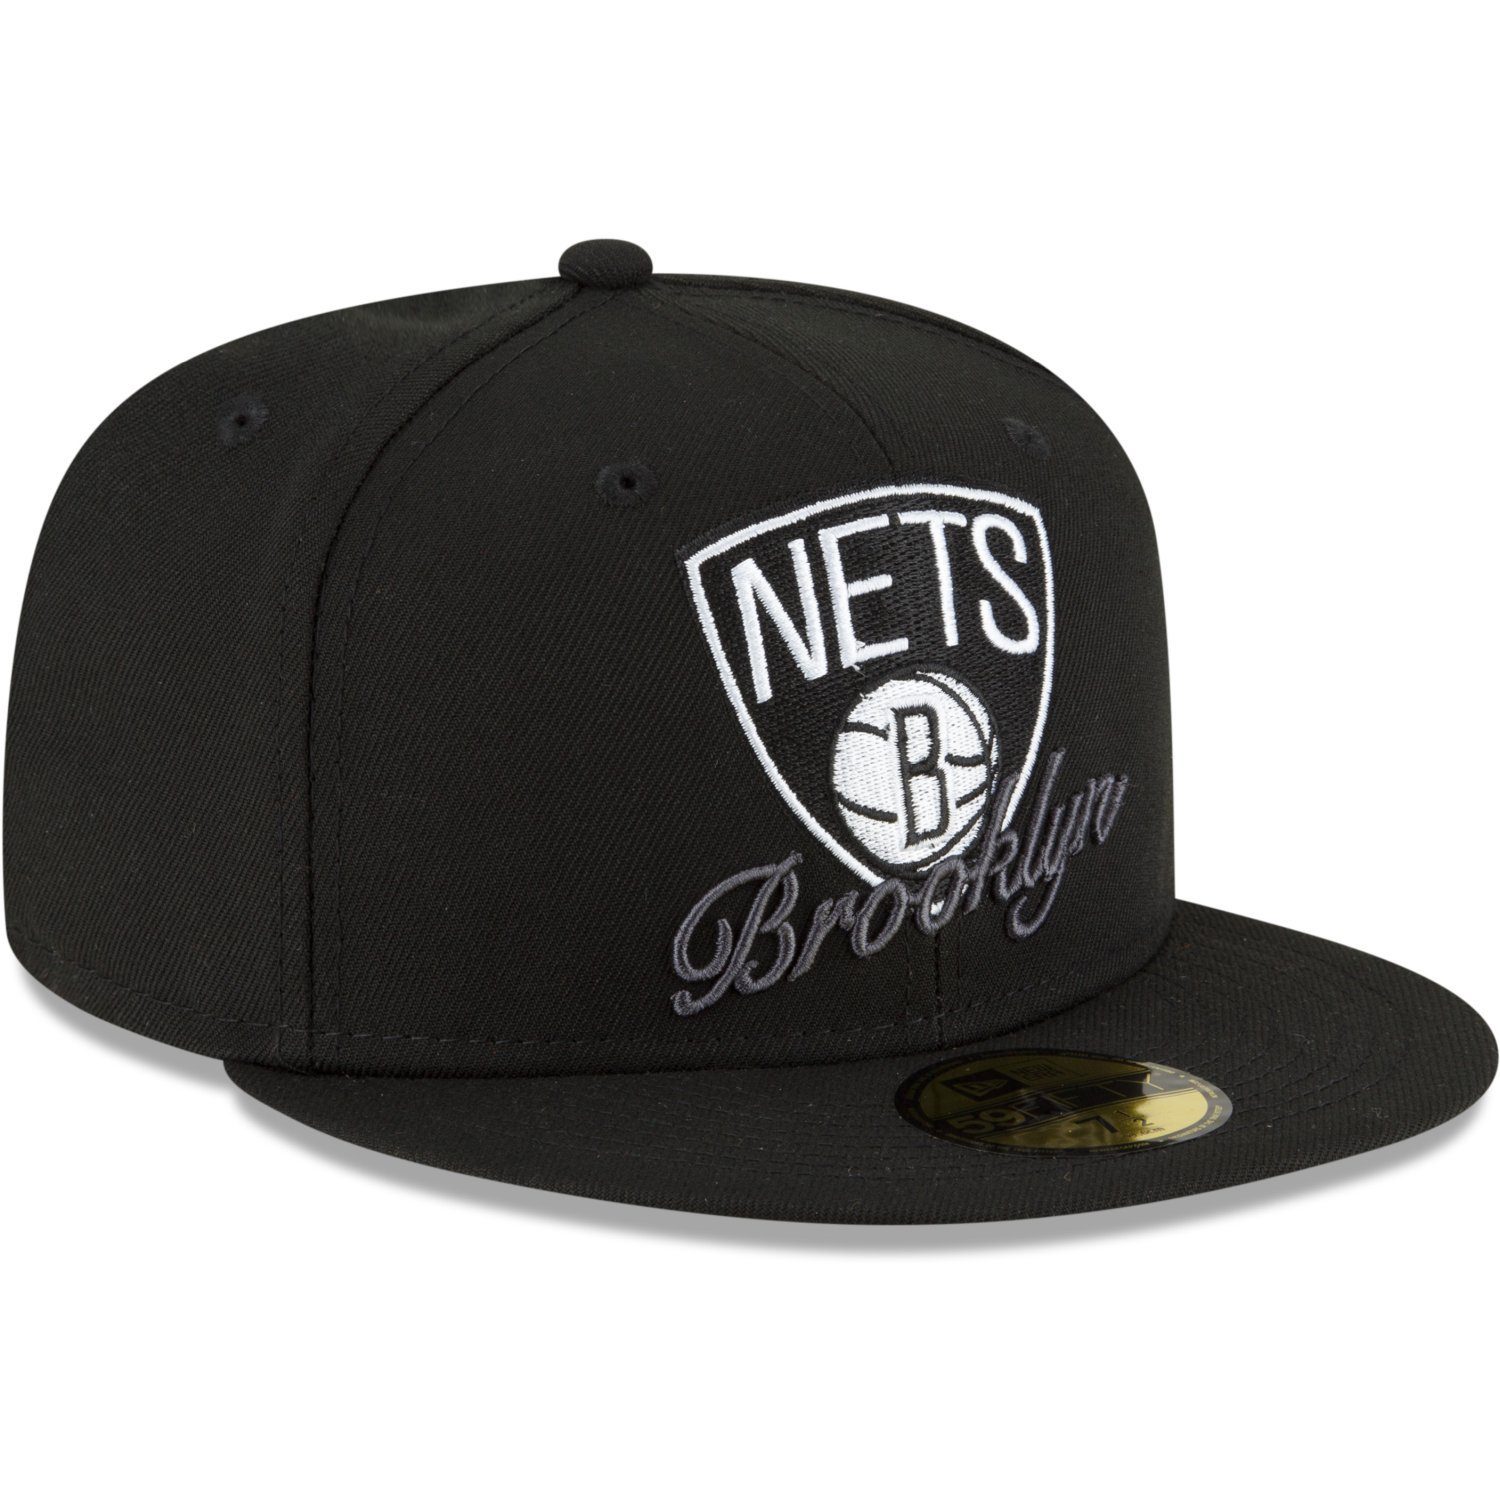 New Nets LOGO Fitted DUAL 59Fifty Cap Era Brooklyn